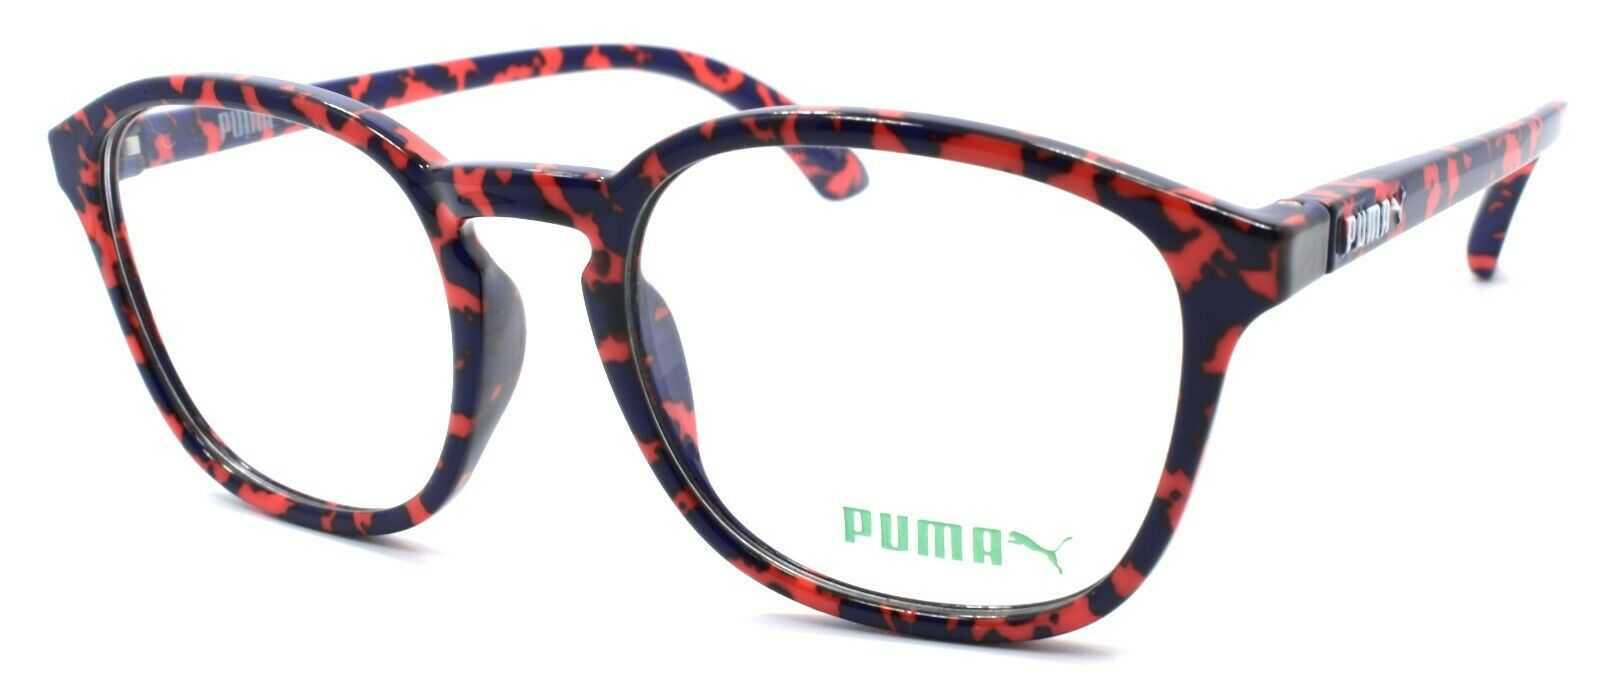 1-PUMA PU0080O 002 Men's Eyeglasses Frames 49-19-145 Red / Blue-889652029832-IKSpecs